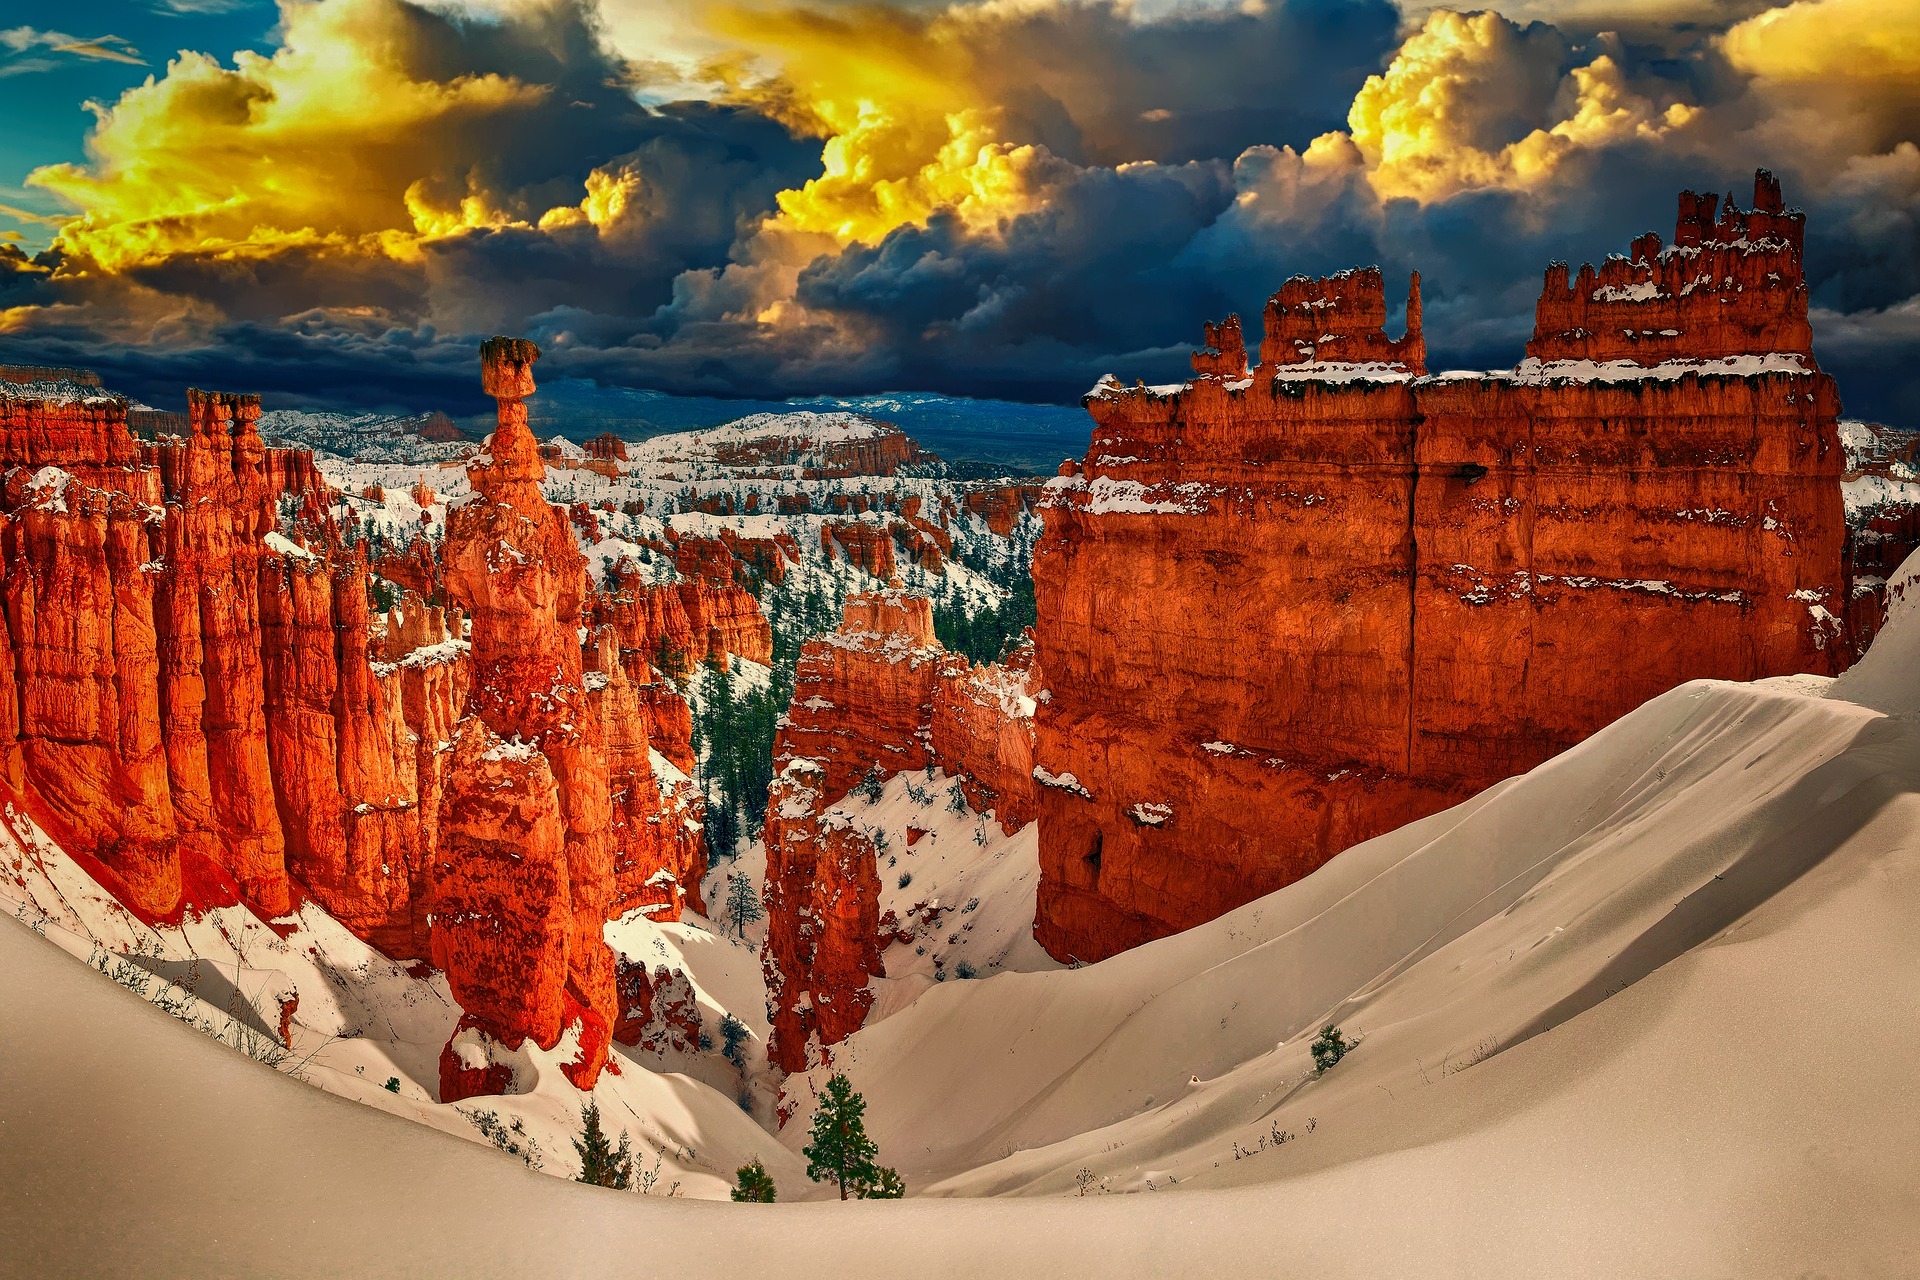 https://pixabay.com/hu/snow-fekv%C5%91-winter-hideg-term%C3%A9szet-2602979/